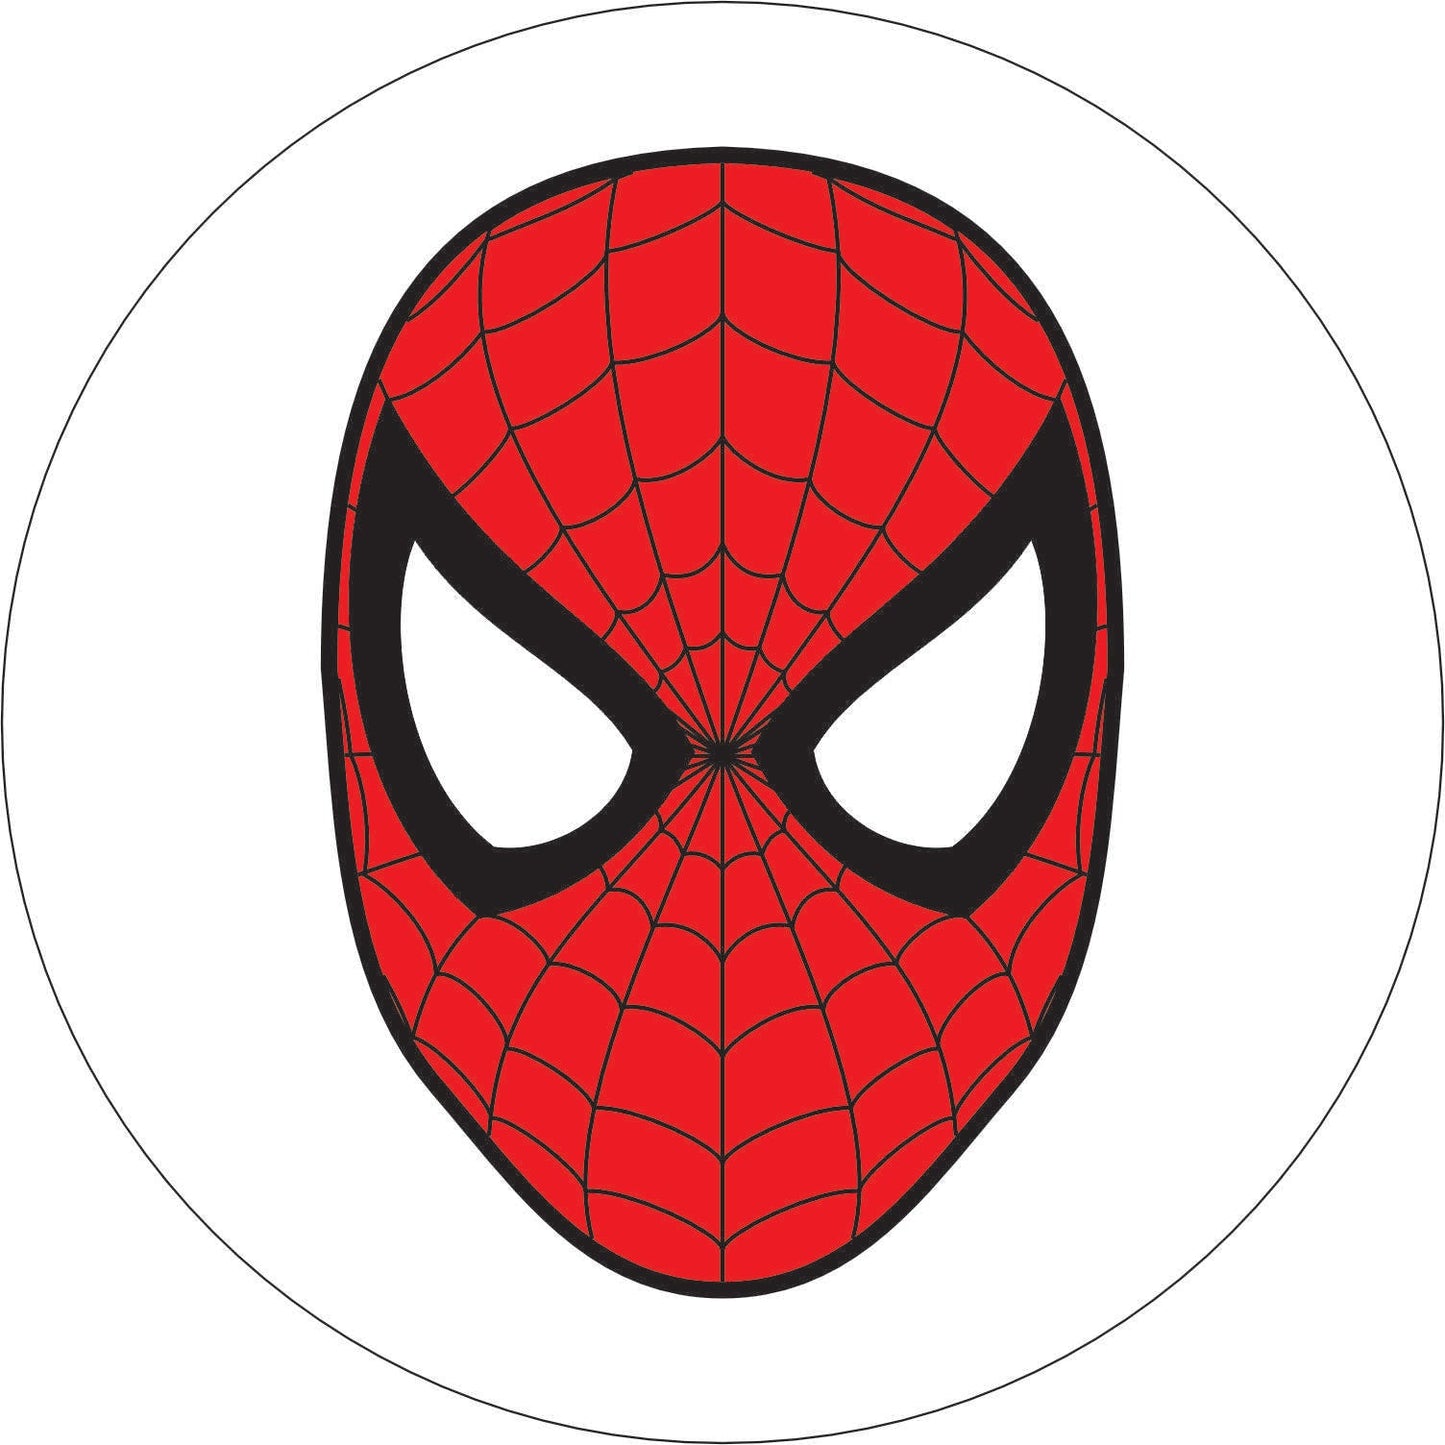 061-Single-sided illuminated sign - Spider Man